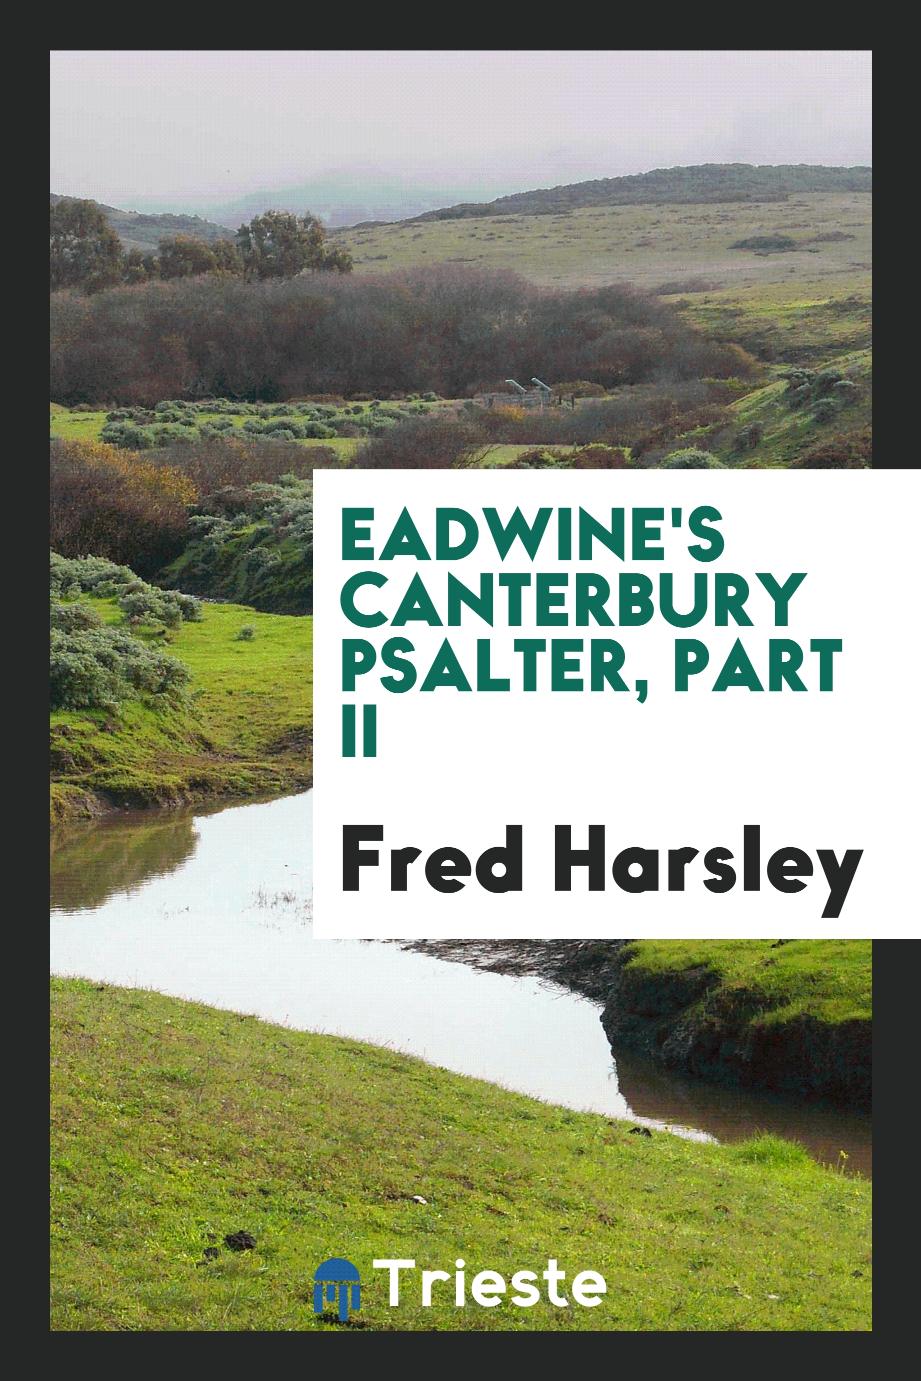 Eadwine's Canterbury Psalter, part II